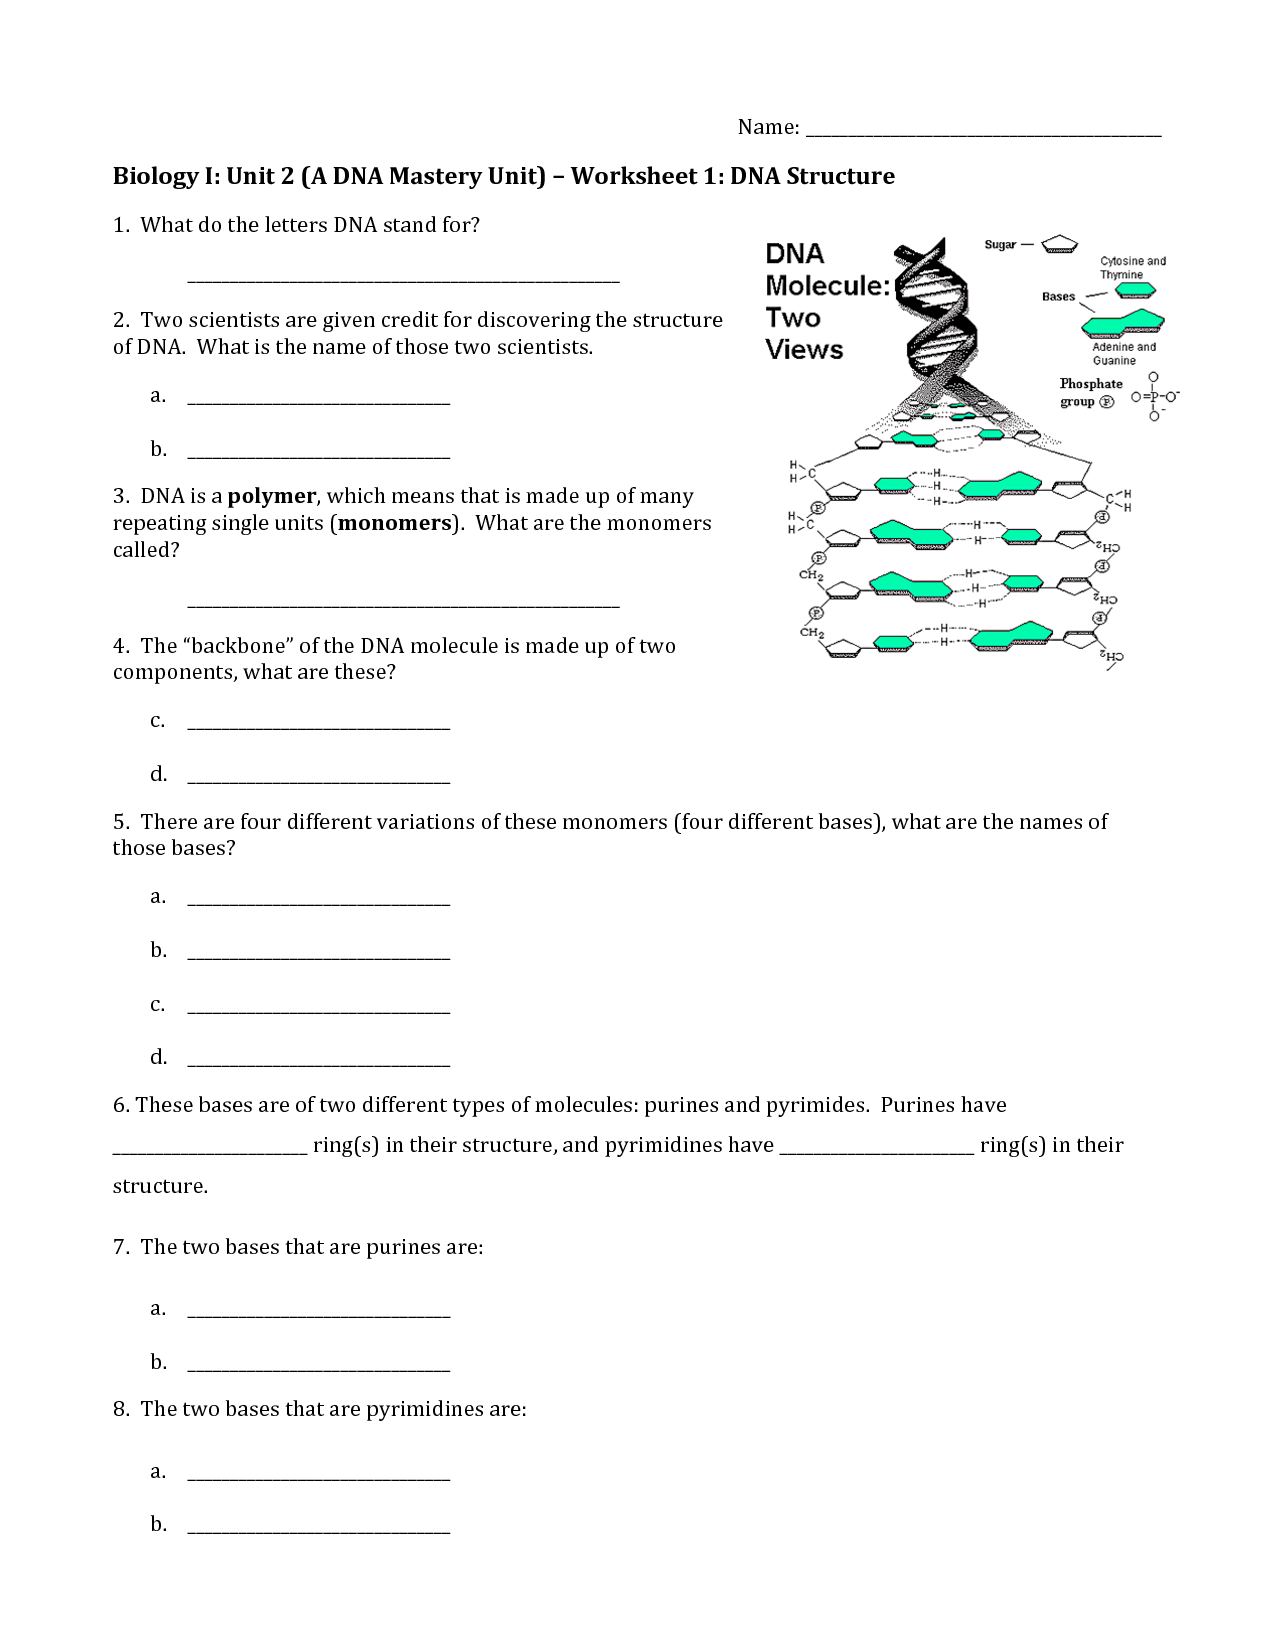 12-dna-the-molecule-of-heredity-worksheet-answer-key-worksheeto